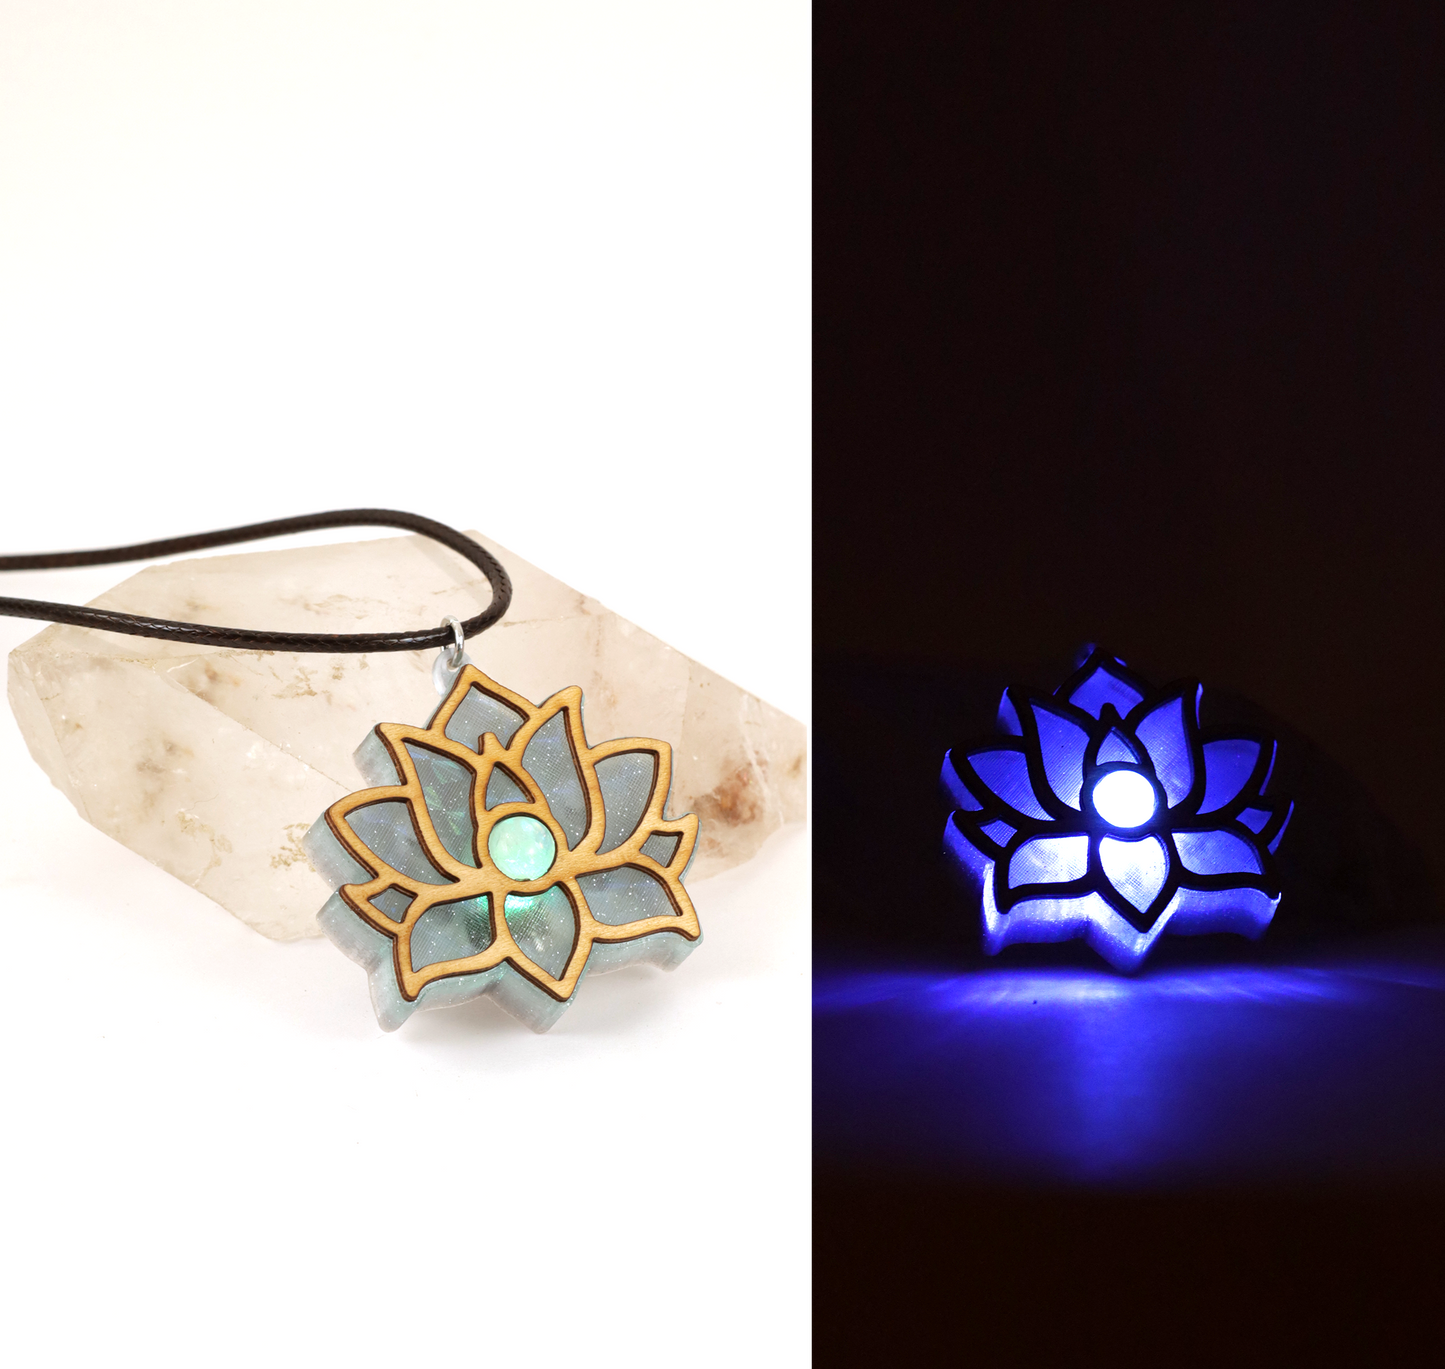 Divine Lotus Holographic Glitter LED Pendant with Rainbow Moonstone